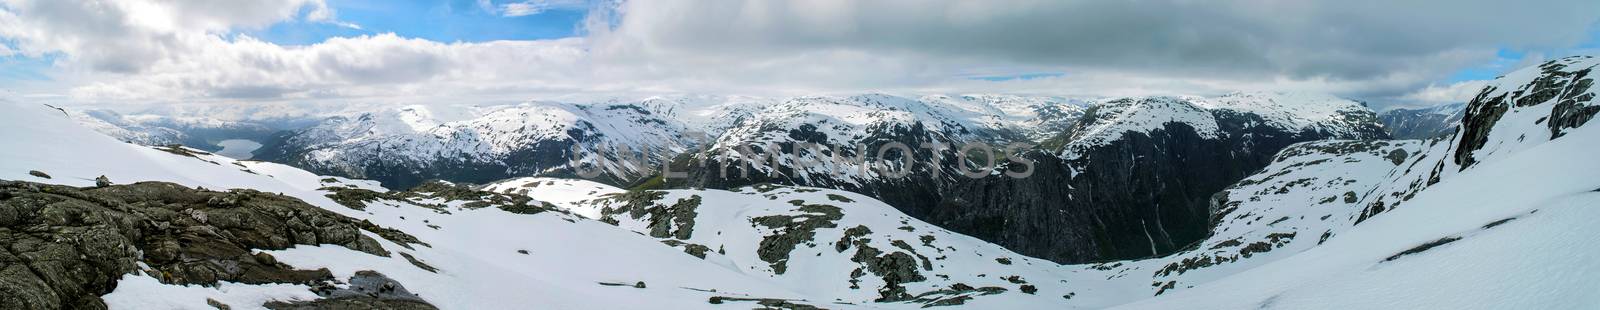 Norway mountain panorama by oleksandrmazur